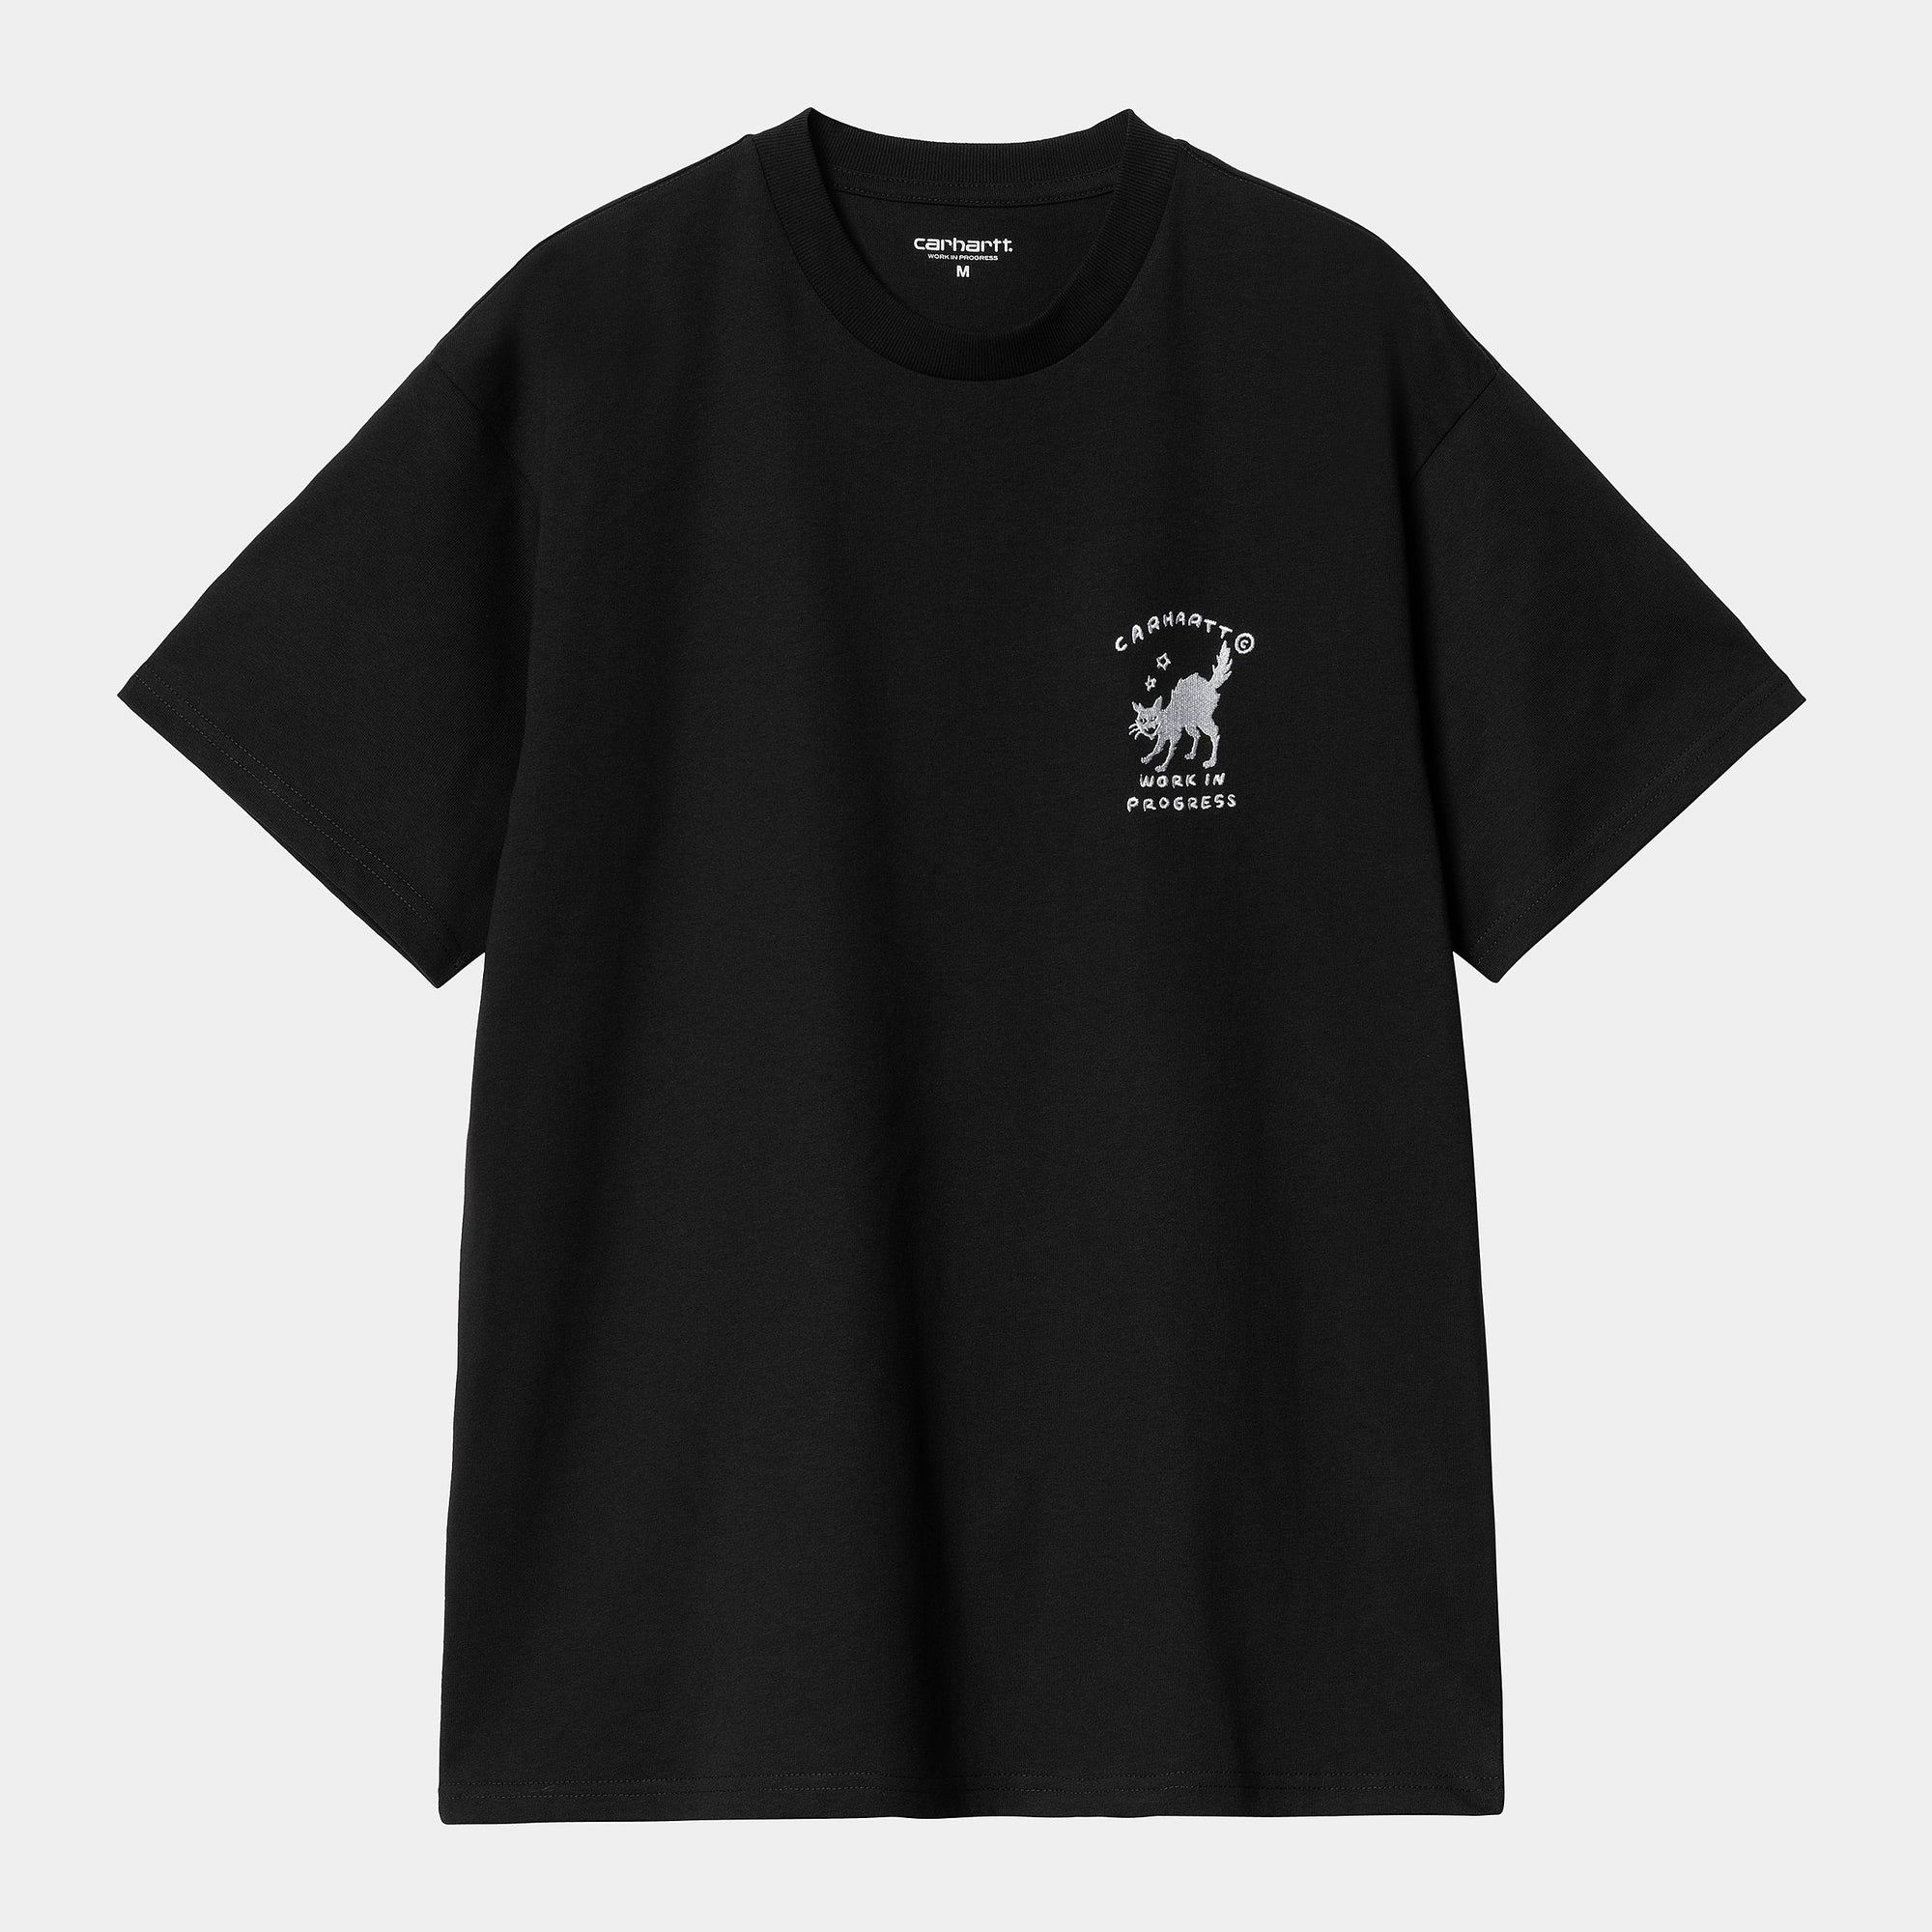 Carhartt WIP Icons T-Shirt - Black / White